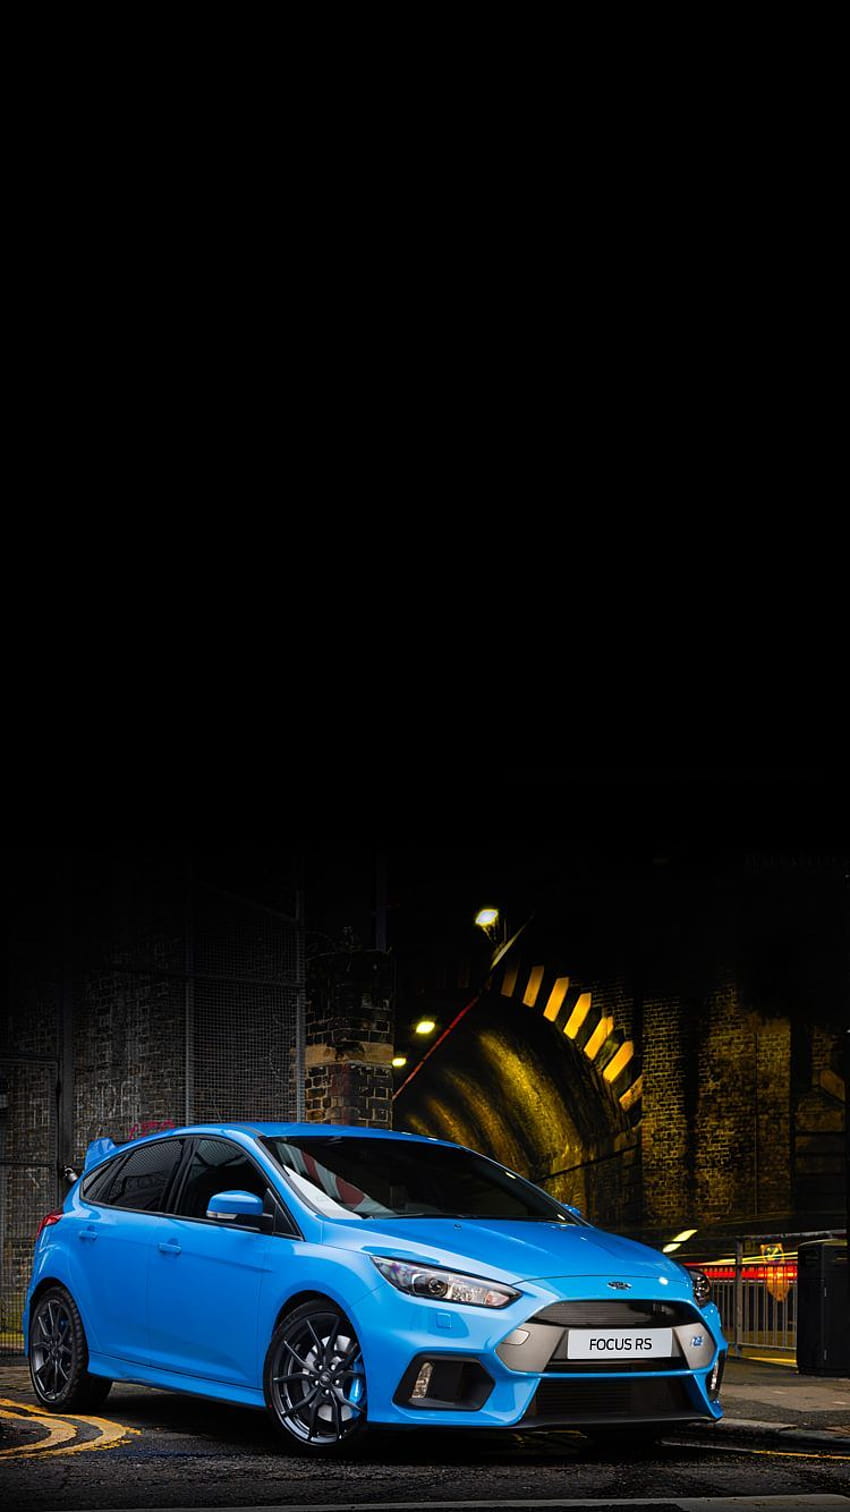 Telepon Universal / Latar Belakang Nitrous Blue Focus RS, fokus rs seluler wallpaper ponsel HD